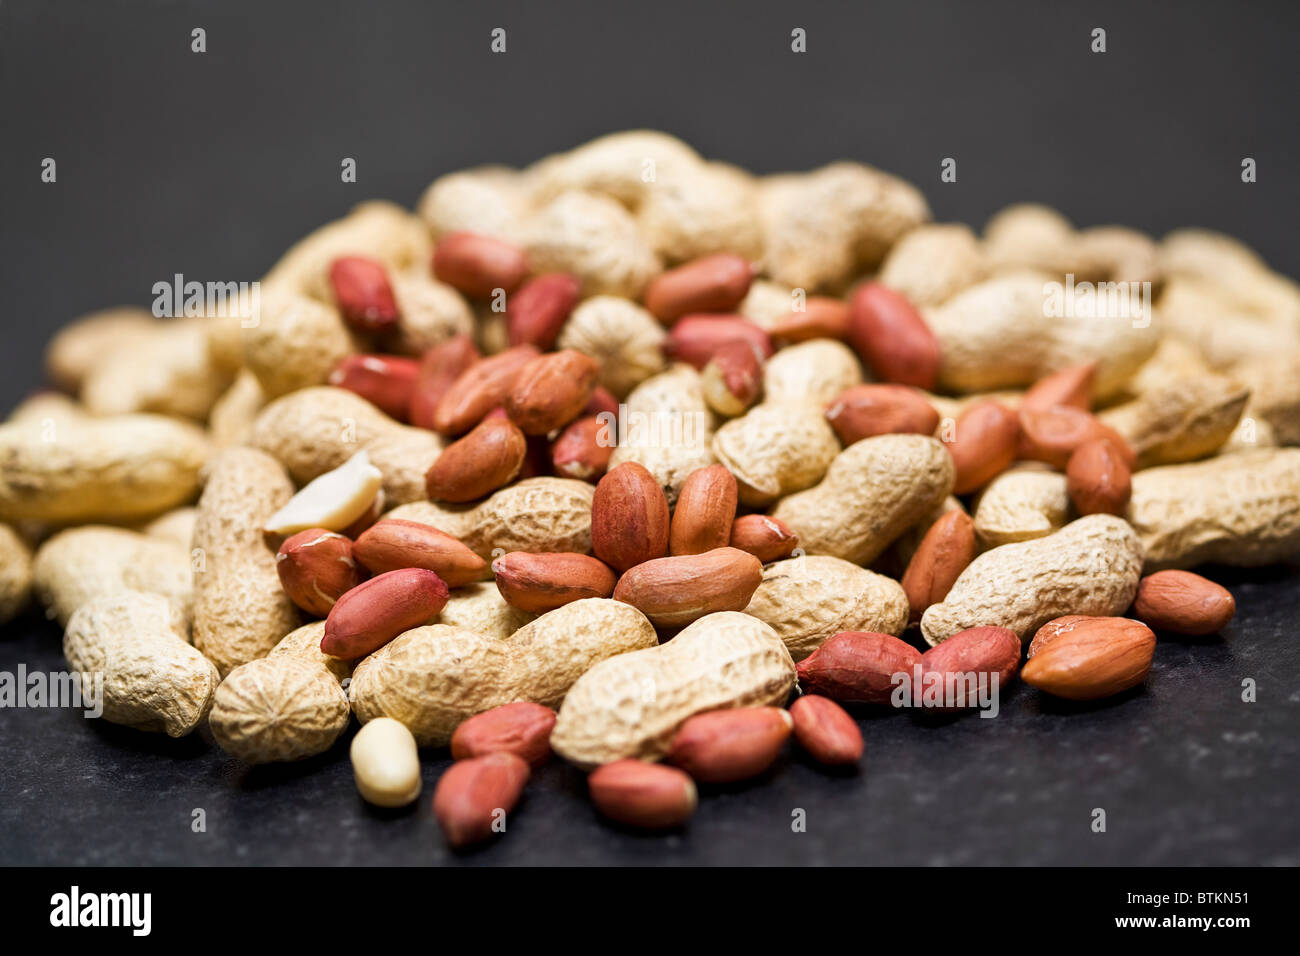 Peanuts on a dark background Stock Photo